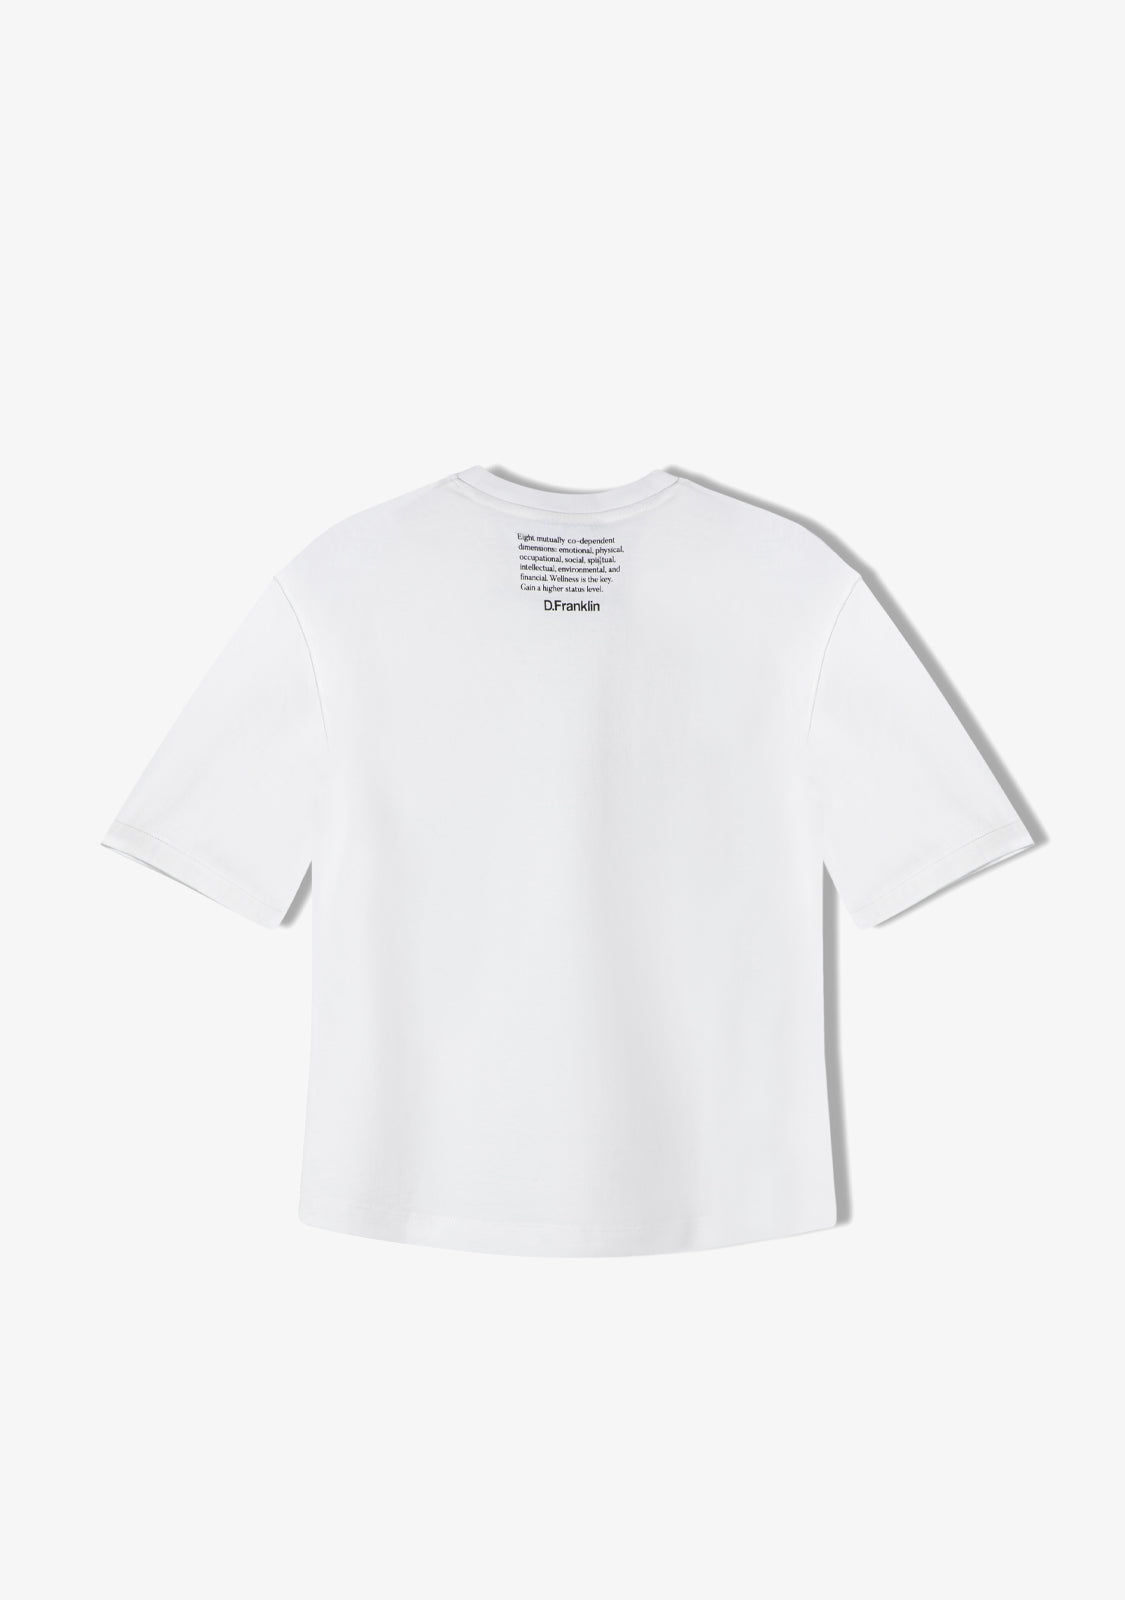 St. Denis Club T-Shirt White / Black